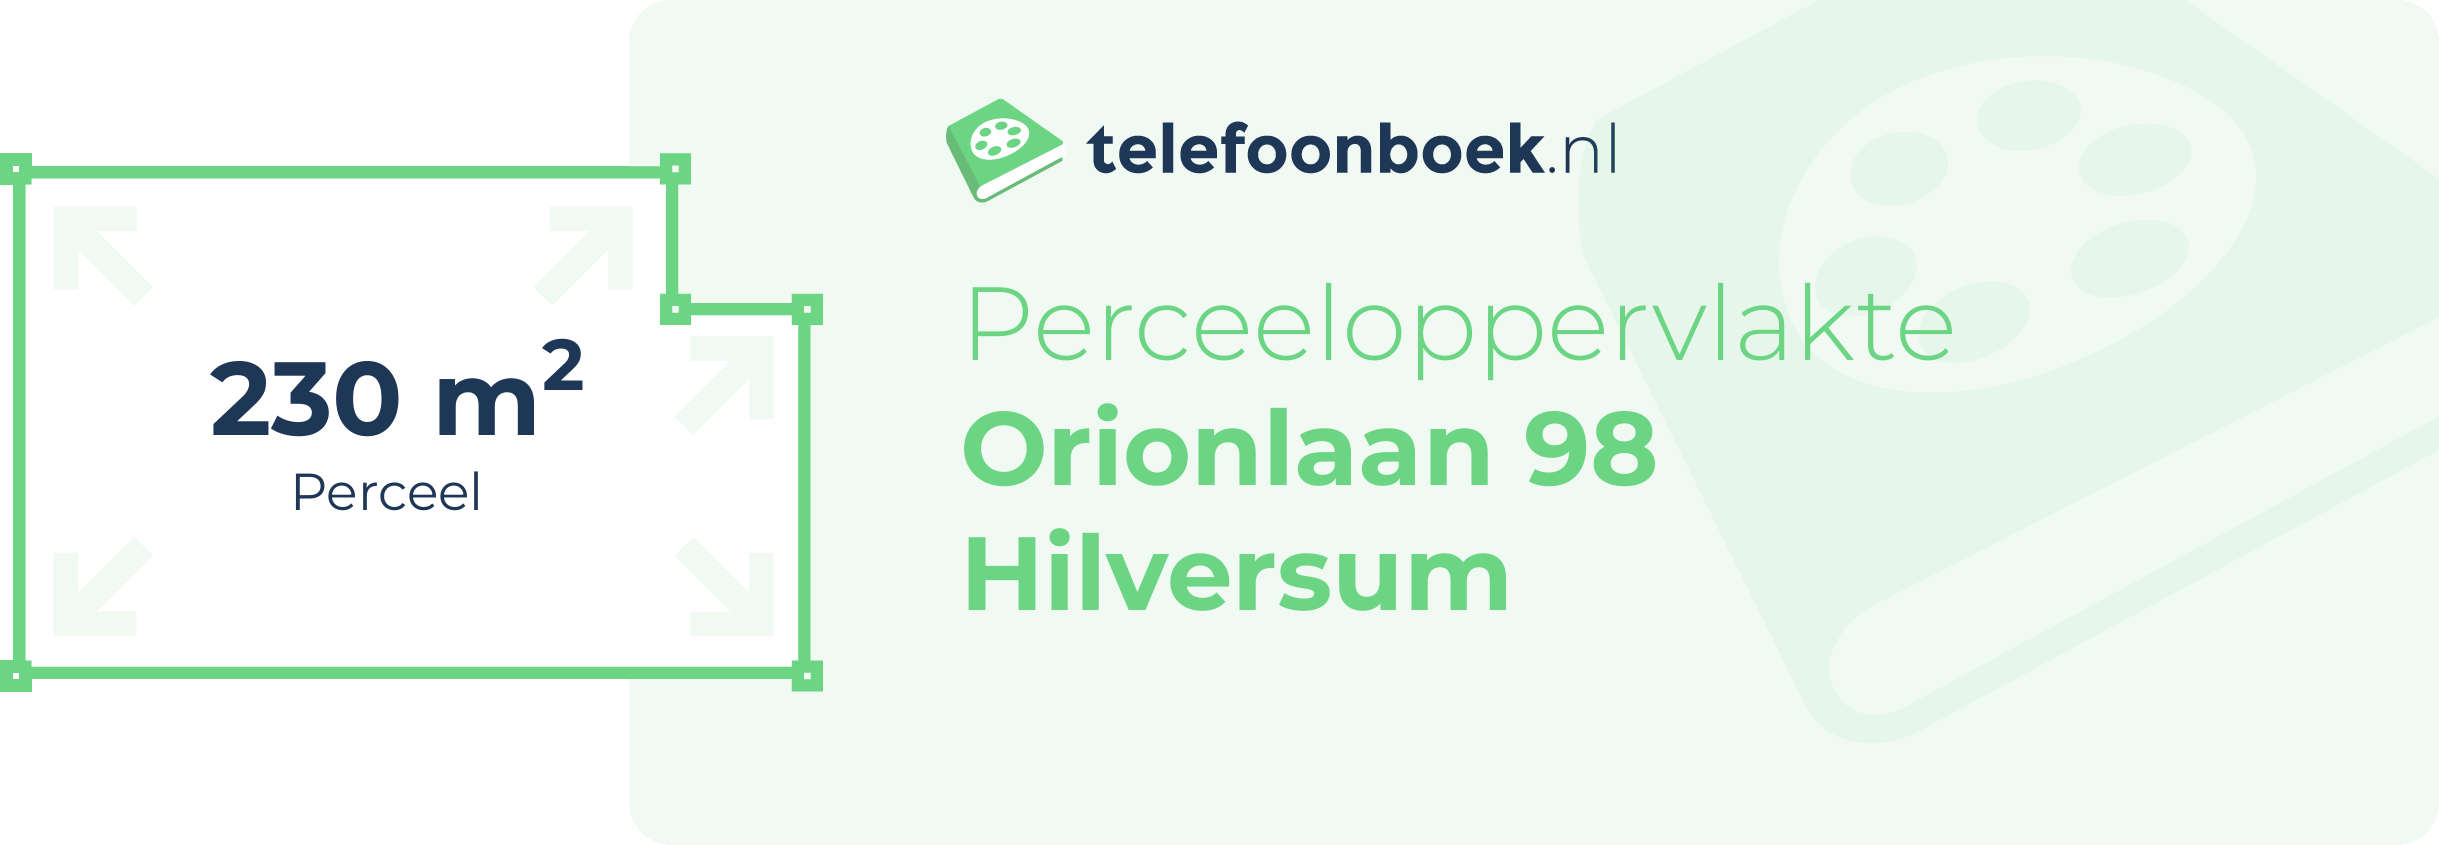 Perceeloppervlakte Orionlaan 98 Hilversum